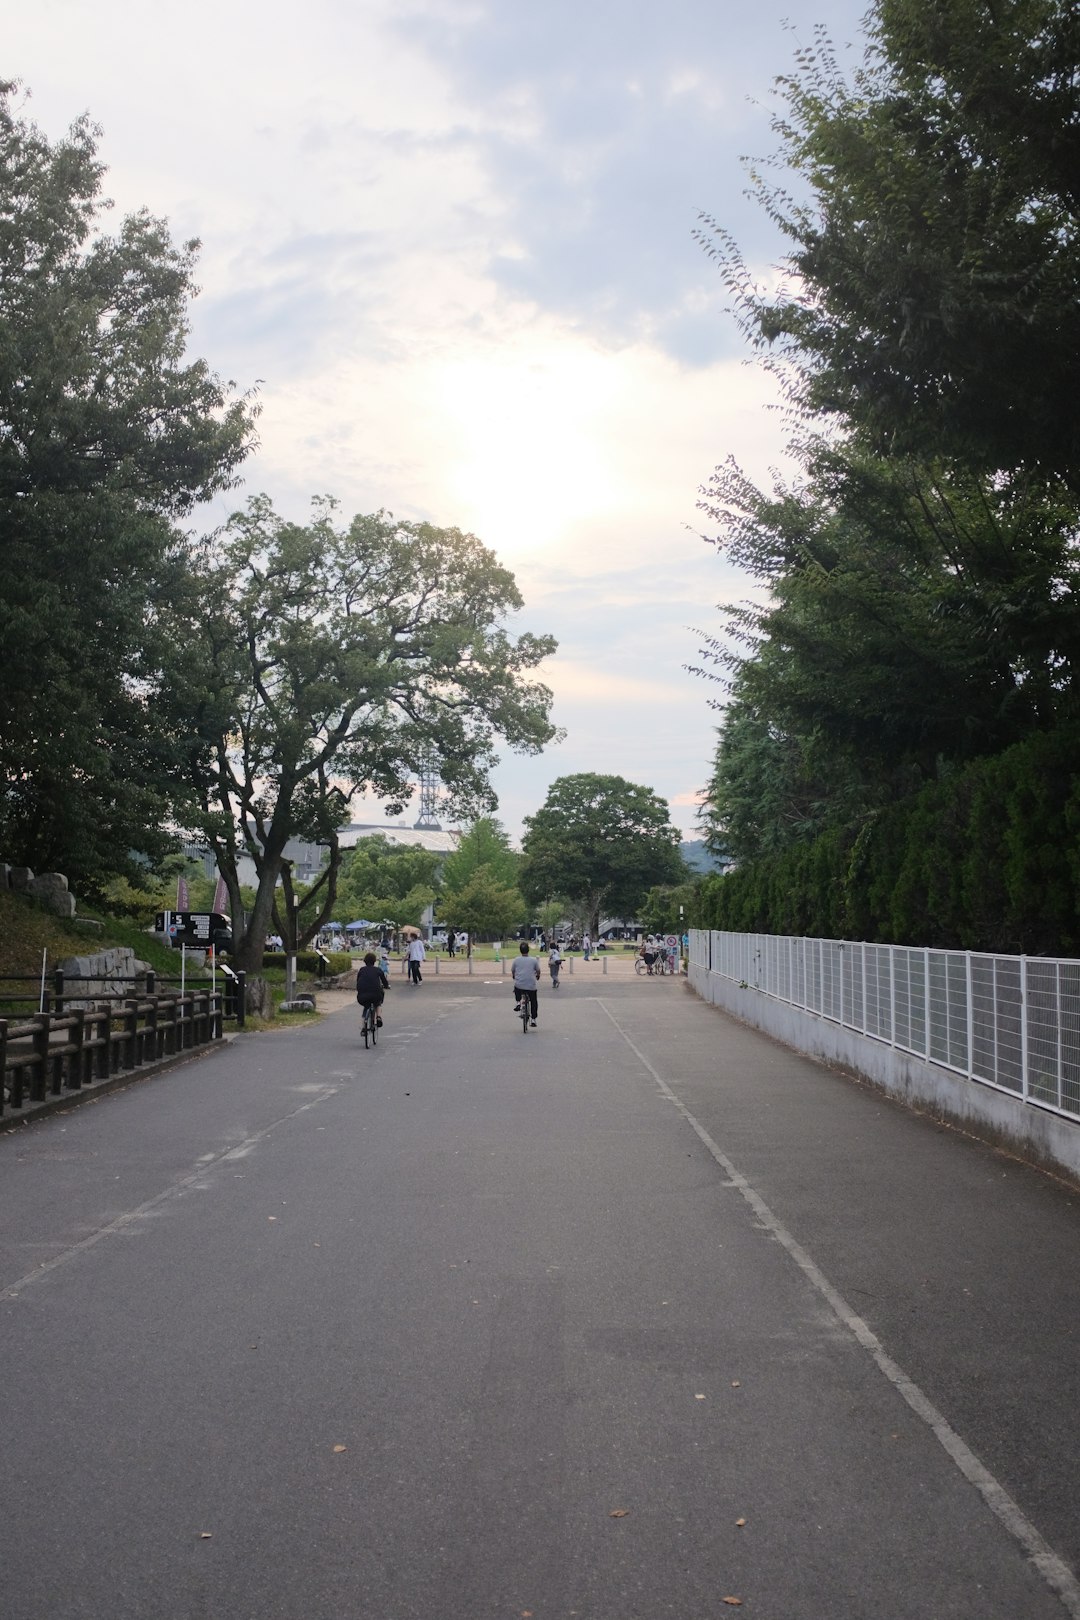 people walking on gray concrete road during daytime